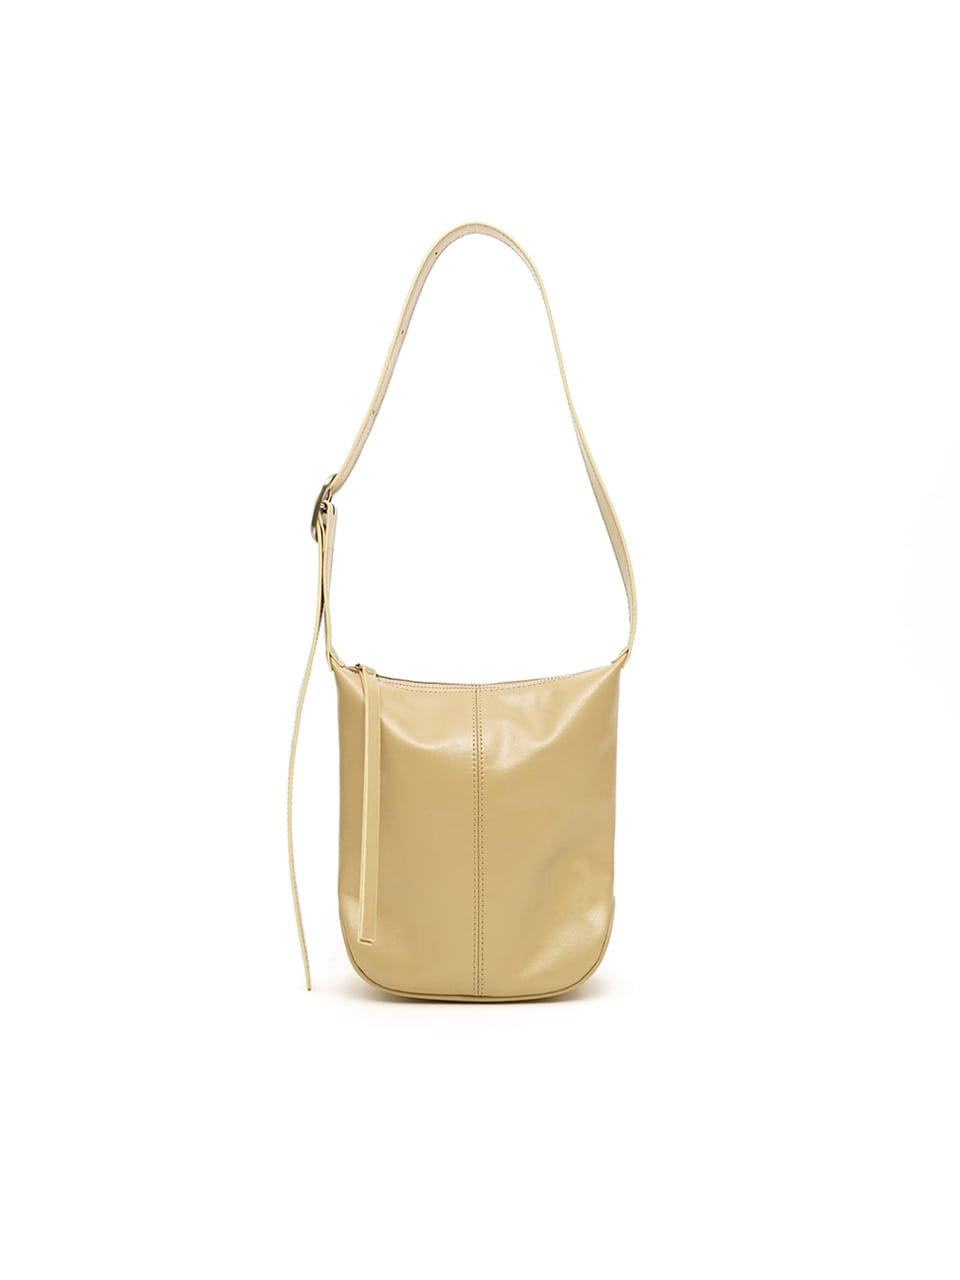 [New 10% off] HAVE mini bag / beige